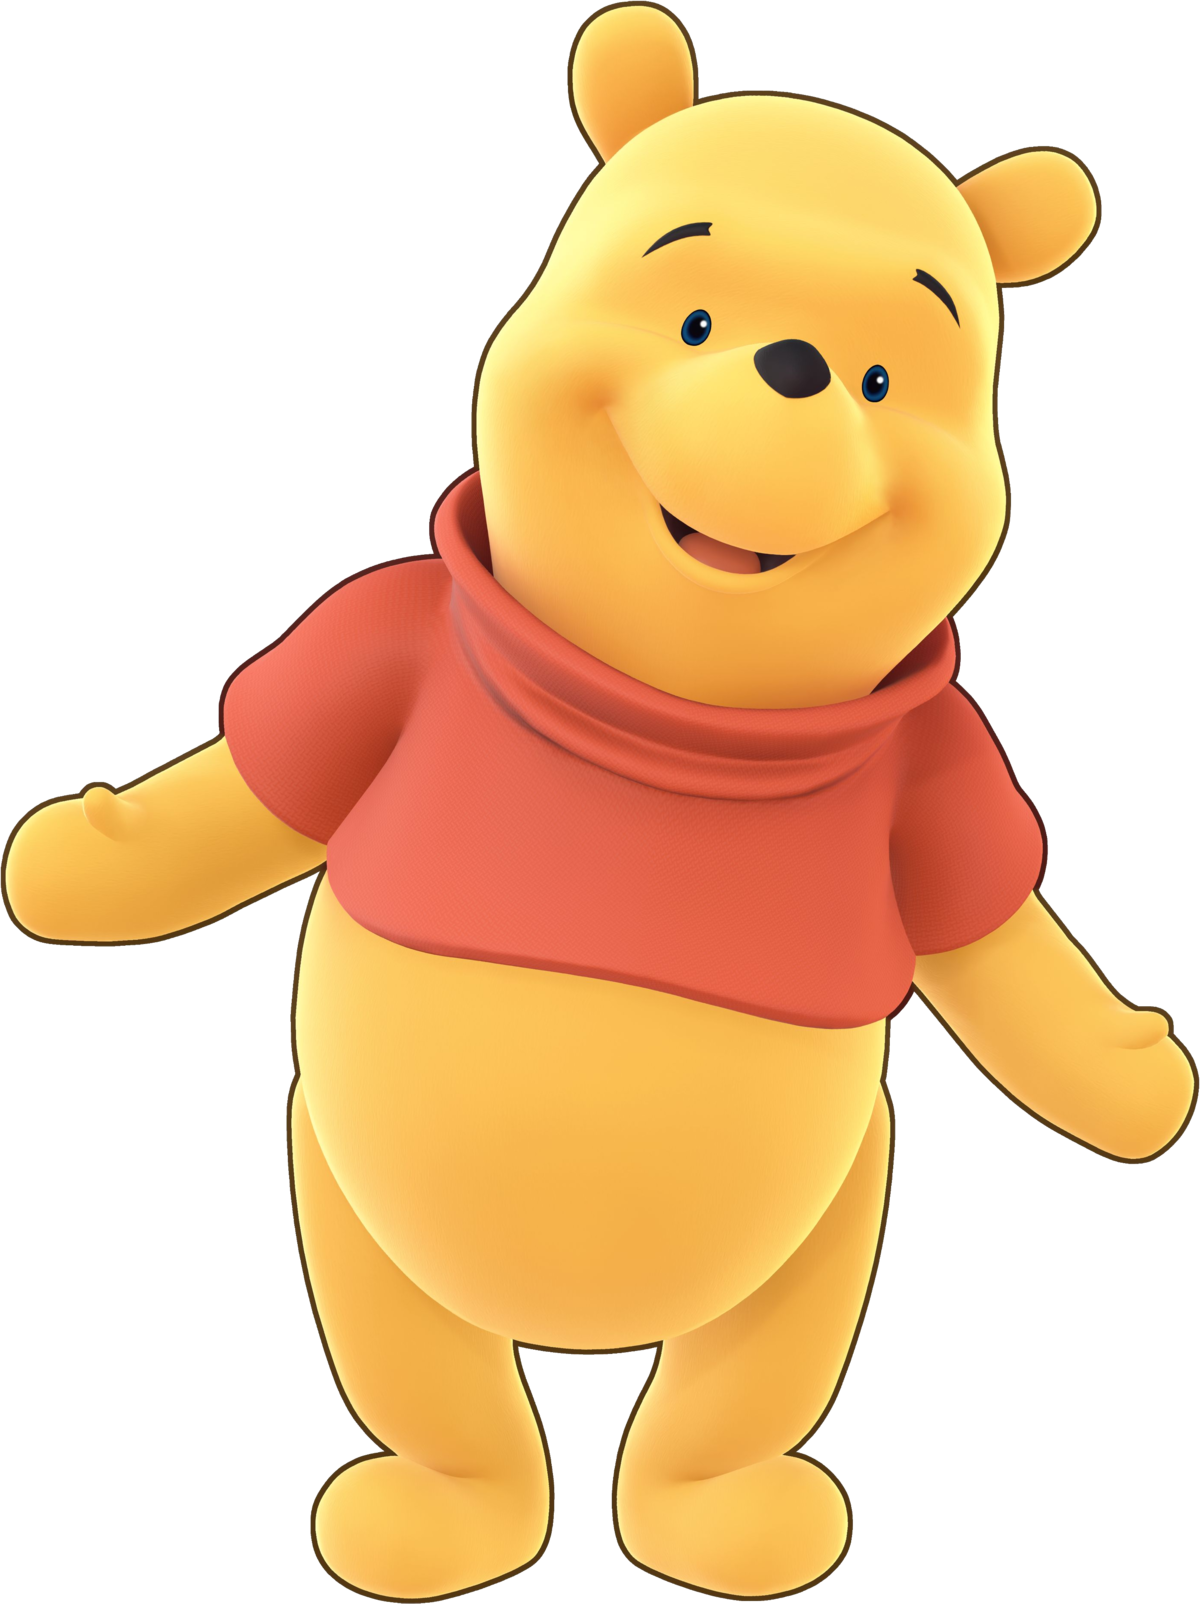 Winnie the Pooh - Kingdom Hearts Wiki, the Kingdom Hearts encyclopedia